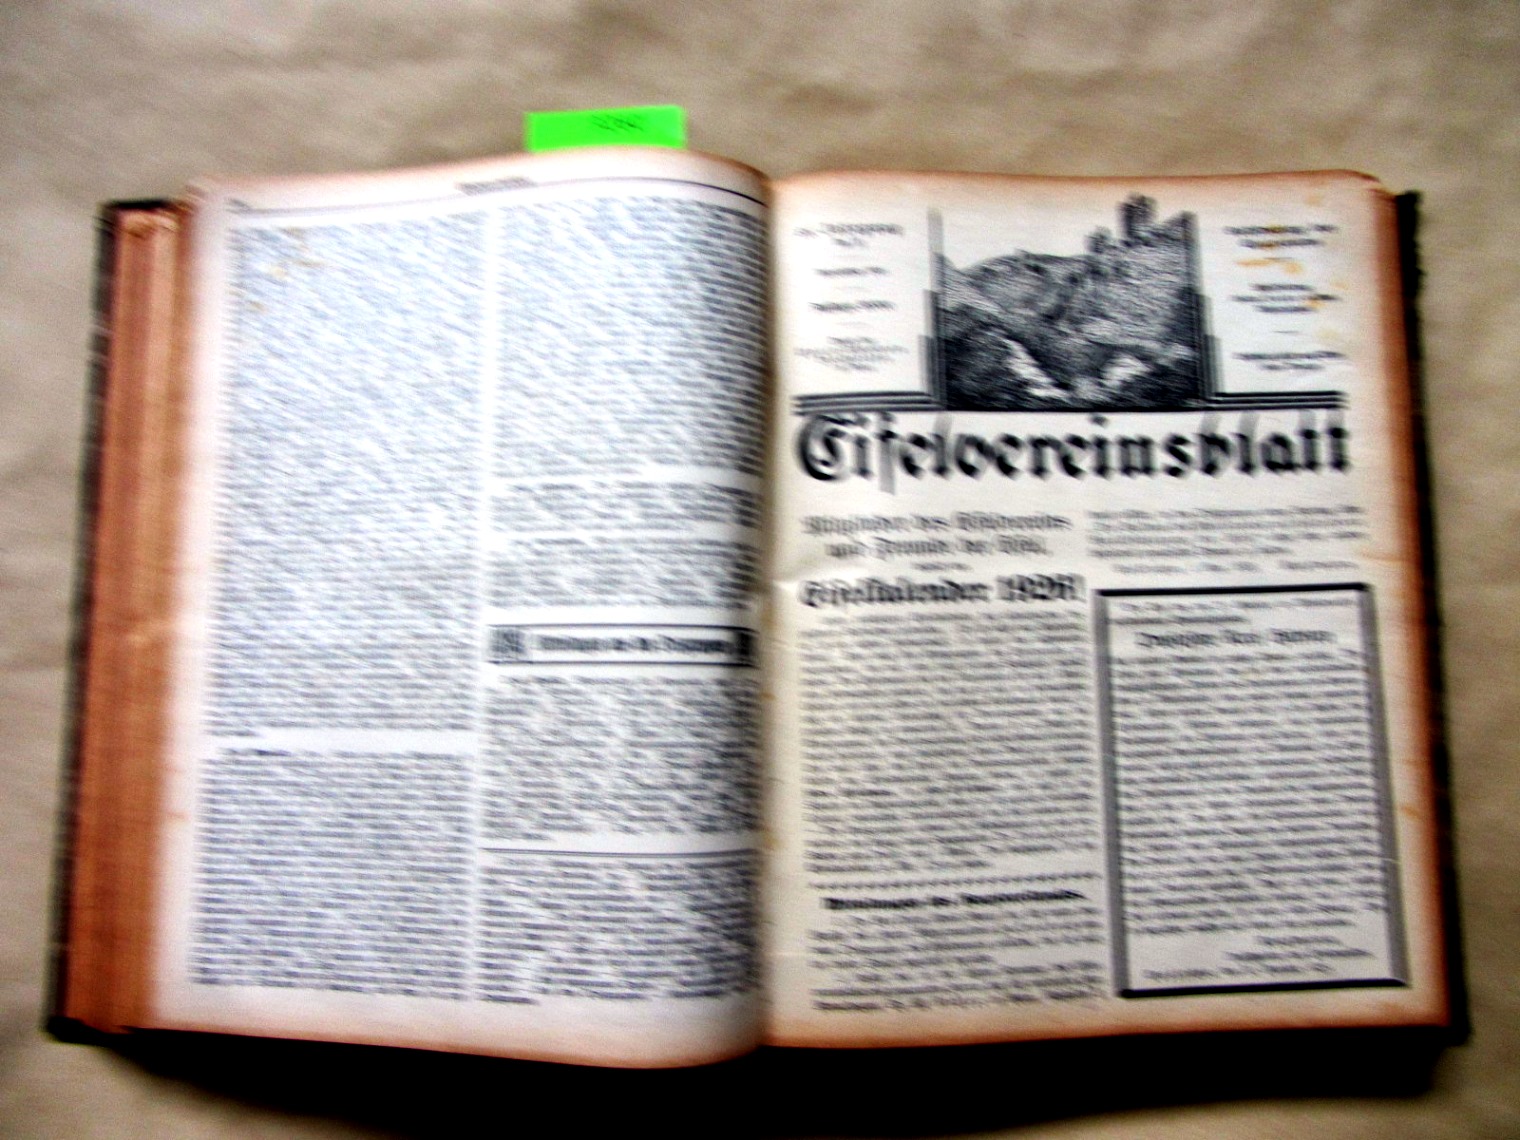   Eifelvereinsblatt. 24.(1923) - 29.(1928) Jahrgang in 1 Band. Hrsg. vom Eifelverein, Bonn. 